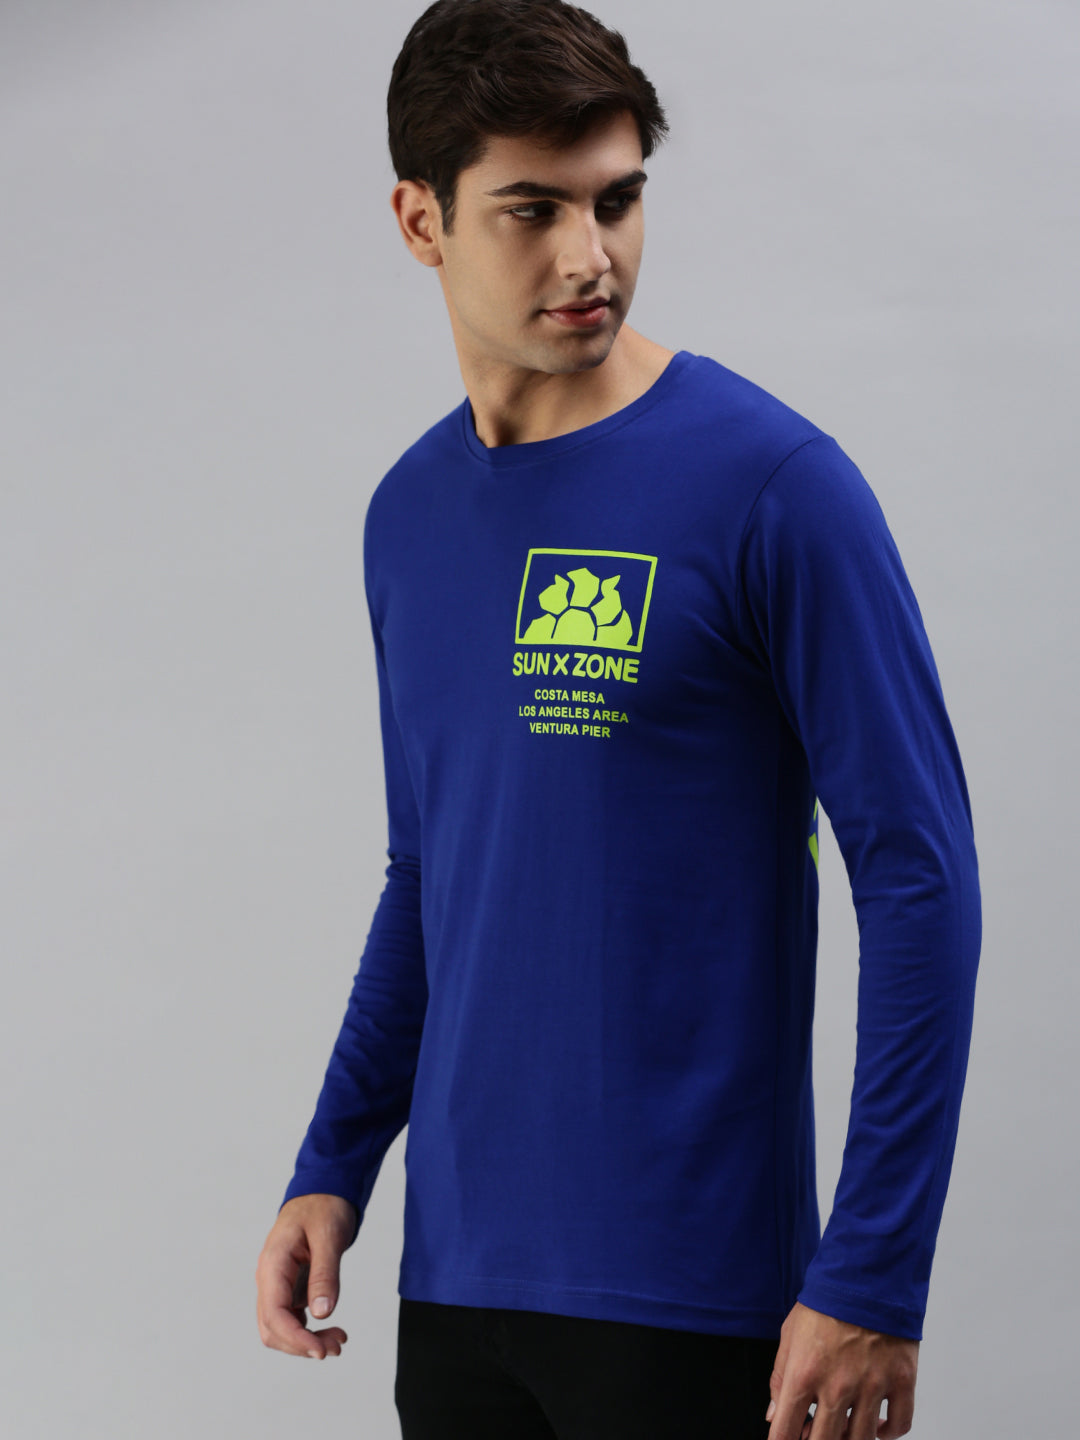 Royal Blue Full Sleeve Printed T-Shirt Veirdo